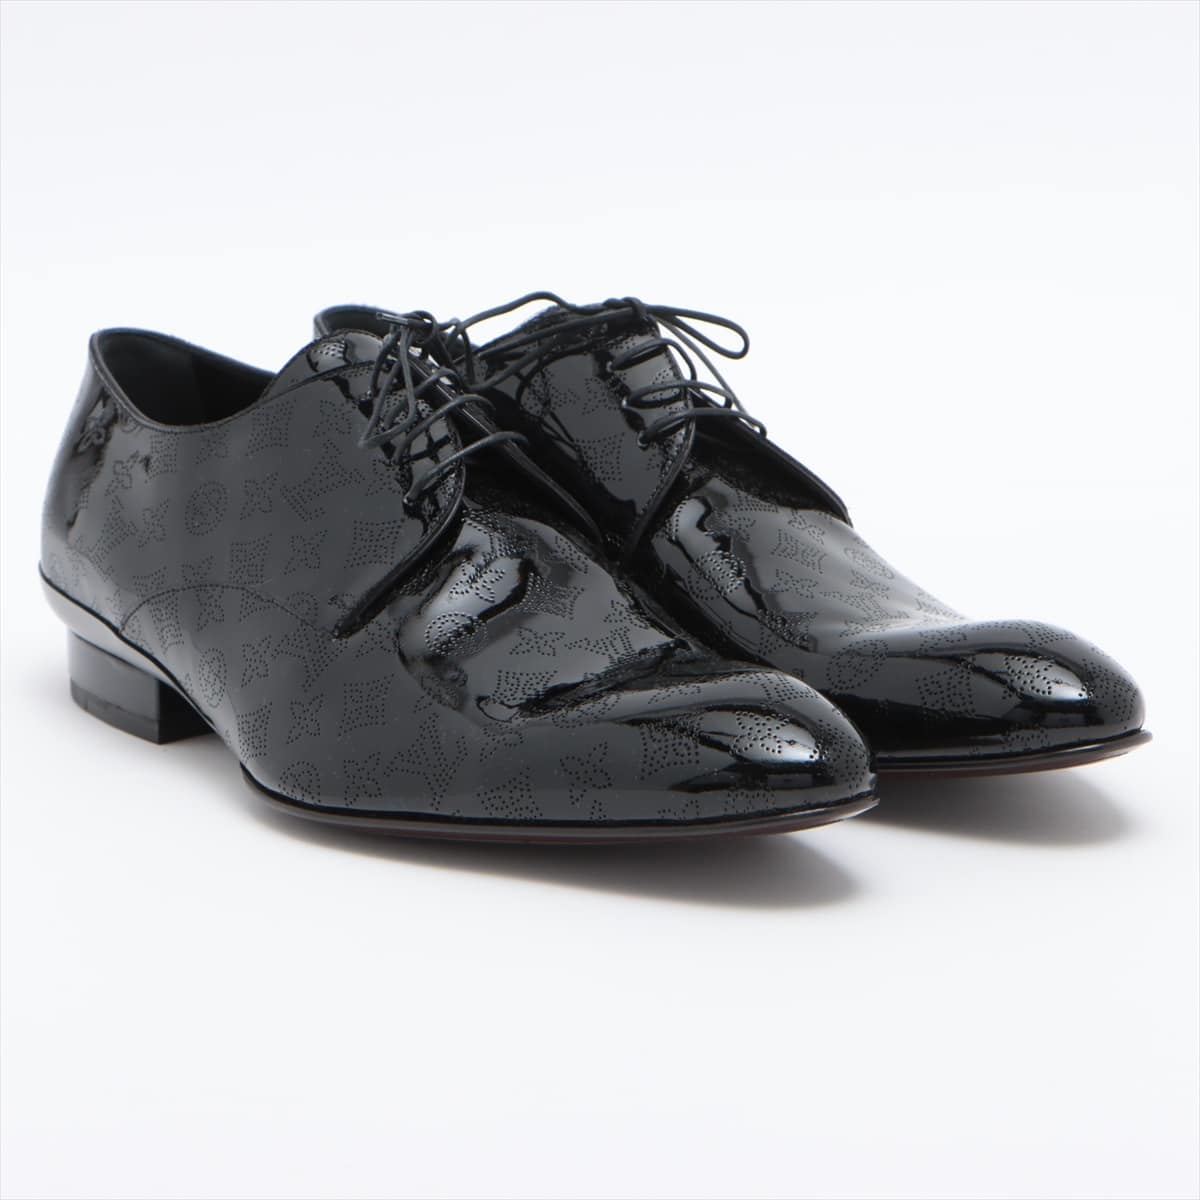 Louis Vuitton Mahina Patent leather Dress shoes 9 Men's Black Monogram NI0180